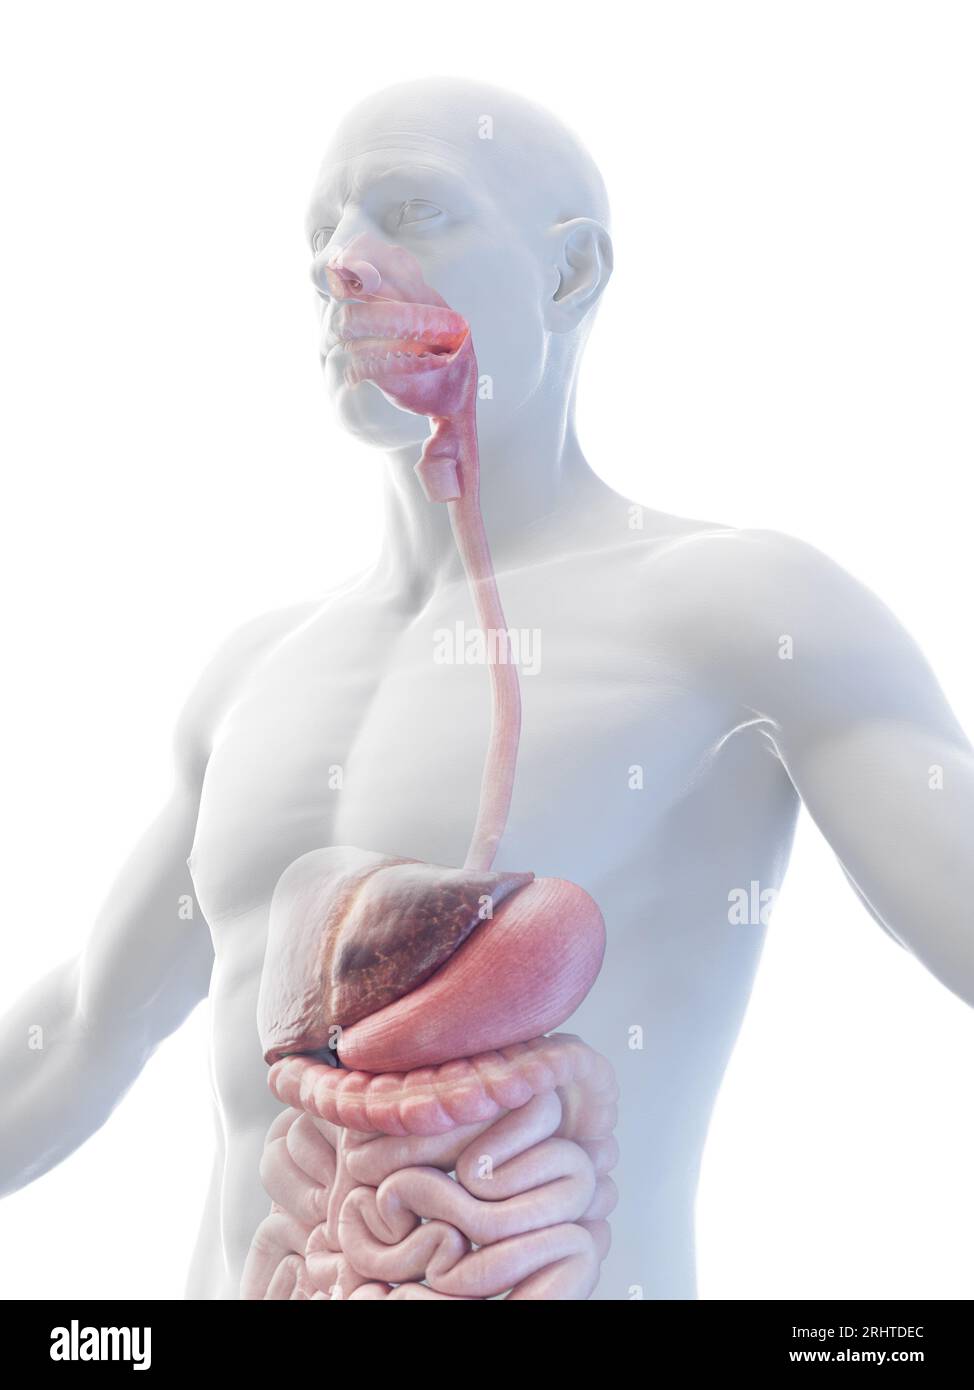 Male internal organs, illustration Stock Photo